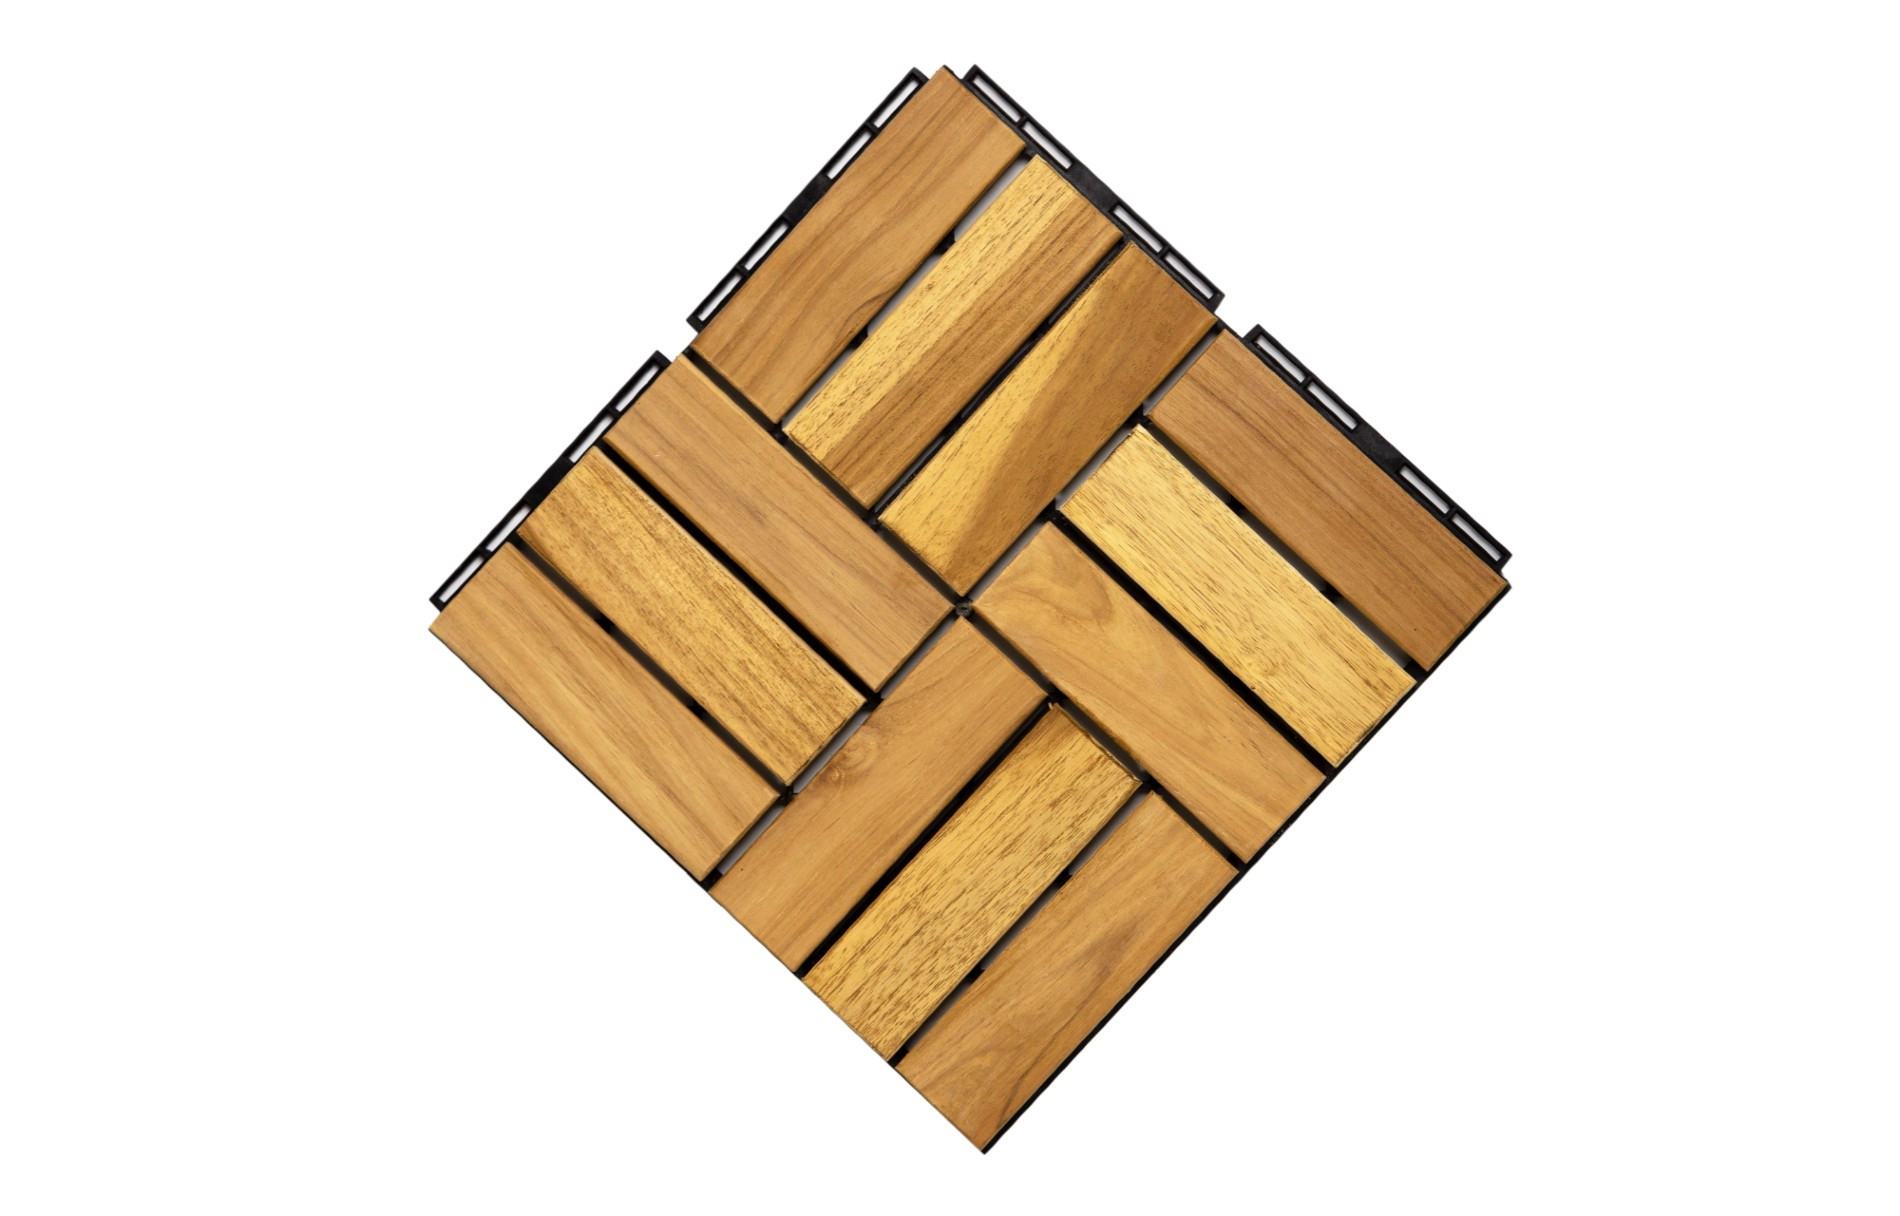 BEEFURNI 12” x 12” Square Teak Hardwood Interlocking Flooring Wood Tiles 12 Slats